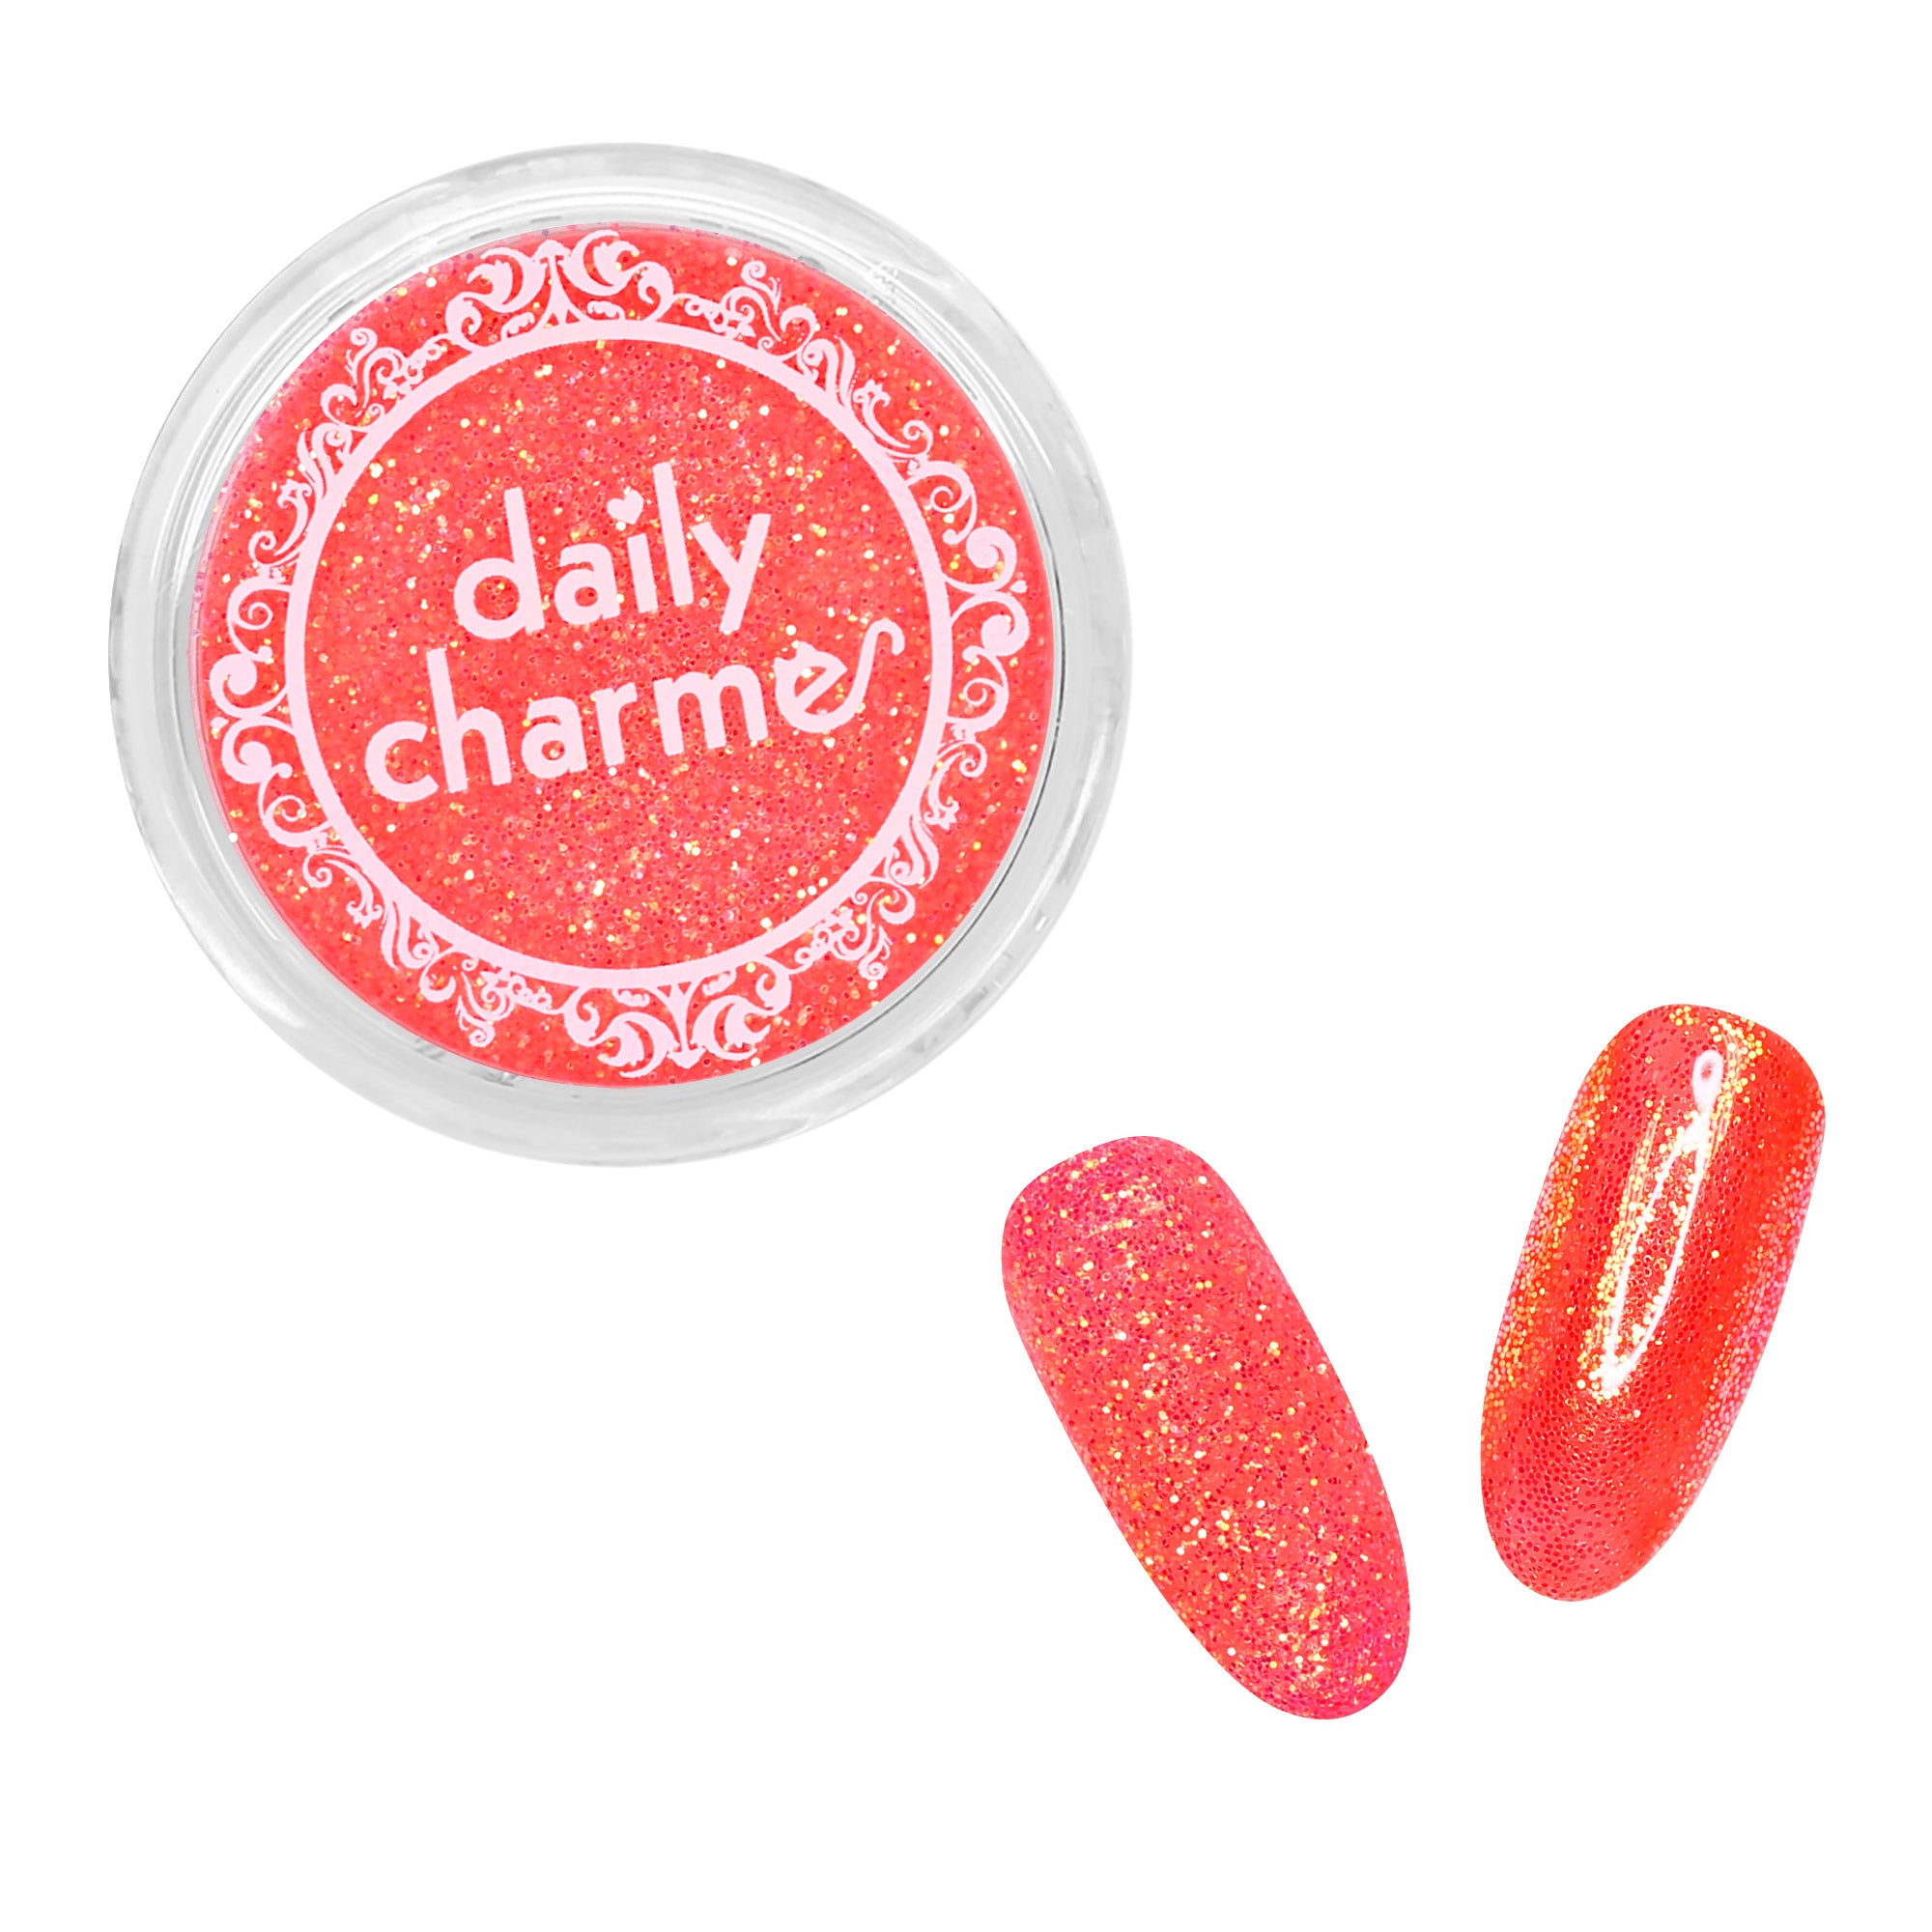 Iridescent Neon Glitter Dust / Coral Paloma Orange Red Summer Nail Art